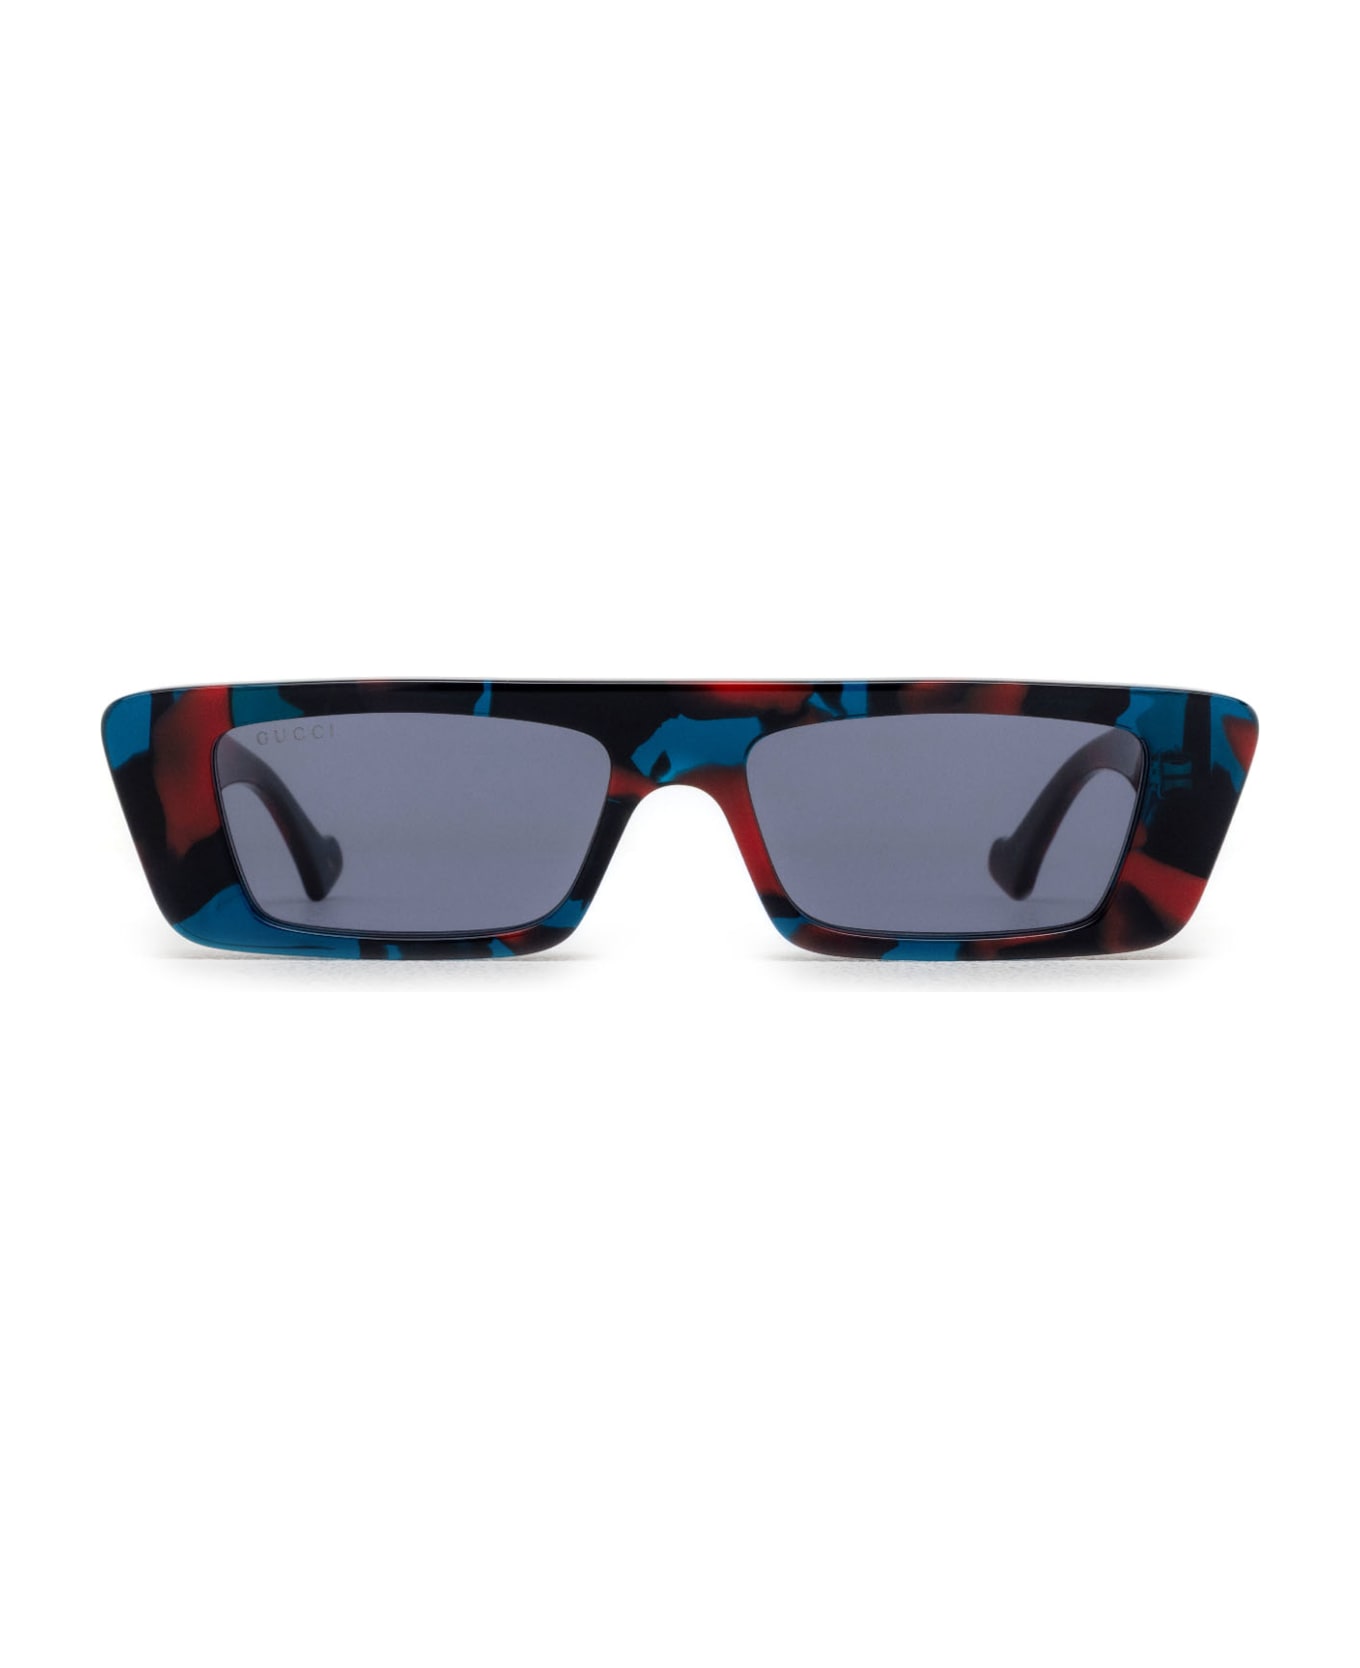 Gucci Eyewear Gg1331s Havana Sunglasses - Havana